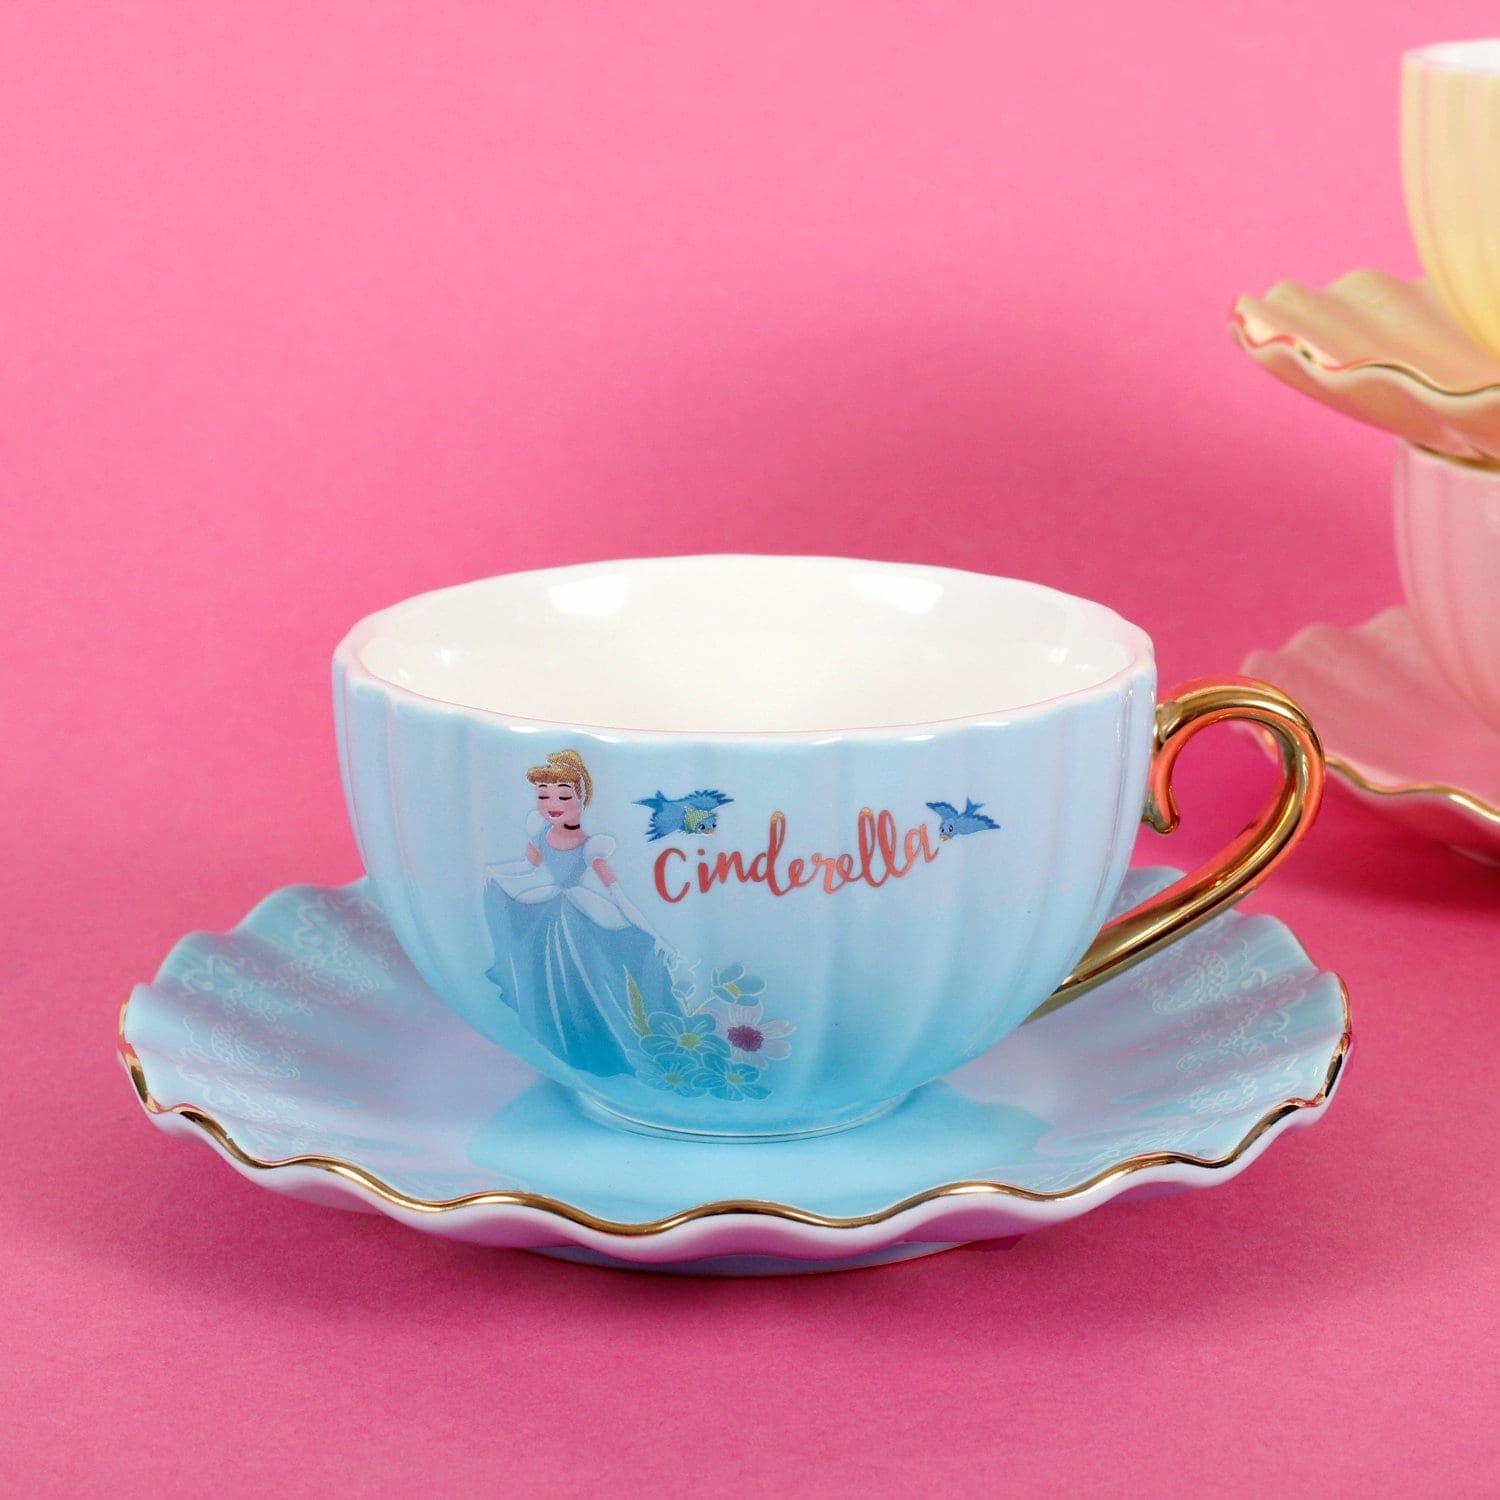 Rae Dunn 2.5qt Tea Kettle TEATIME - Pink w/ Red Flowers - Brand